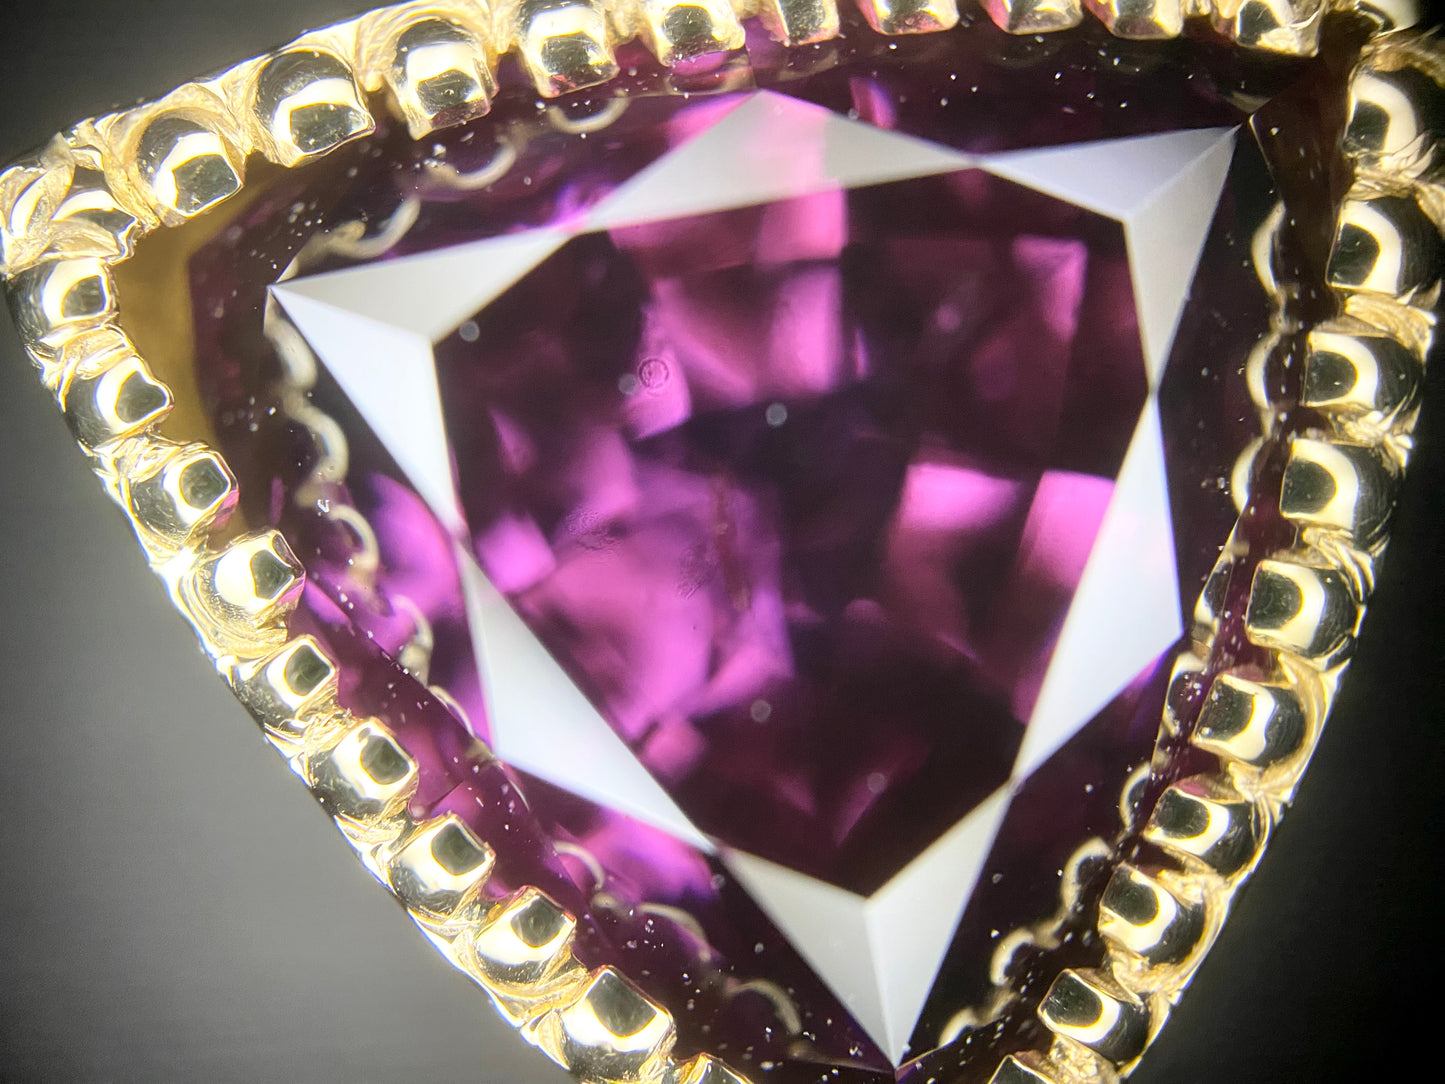 New] [Rare Stone] Malaya Garnet Necklace Jewelry